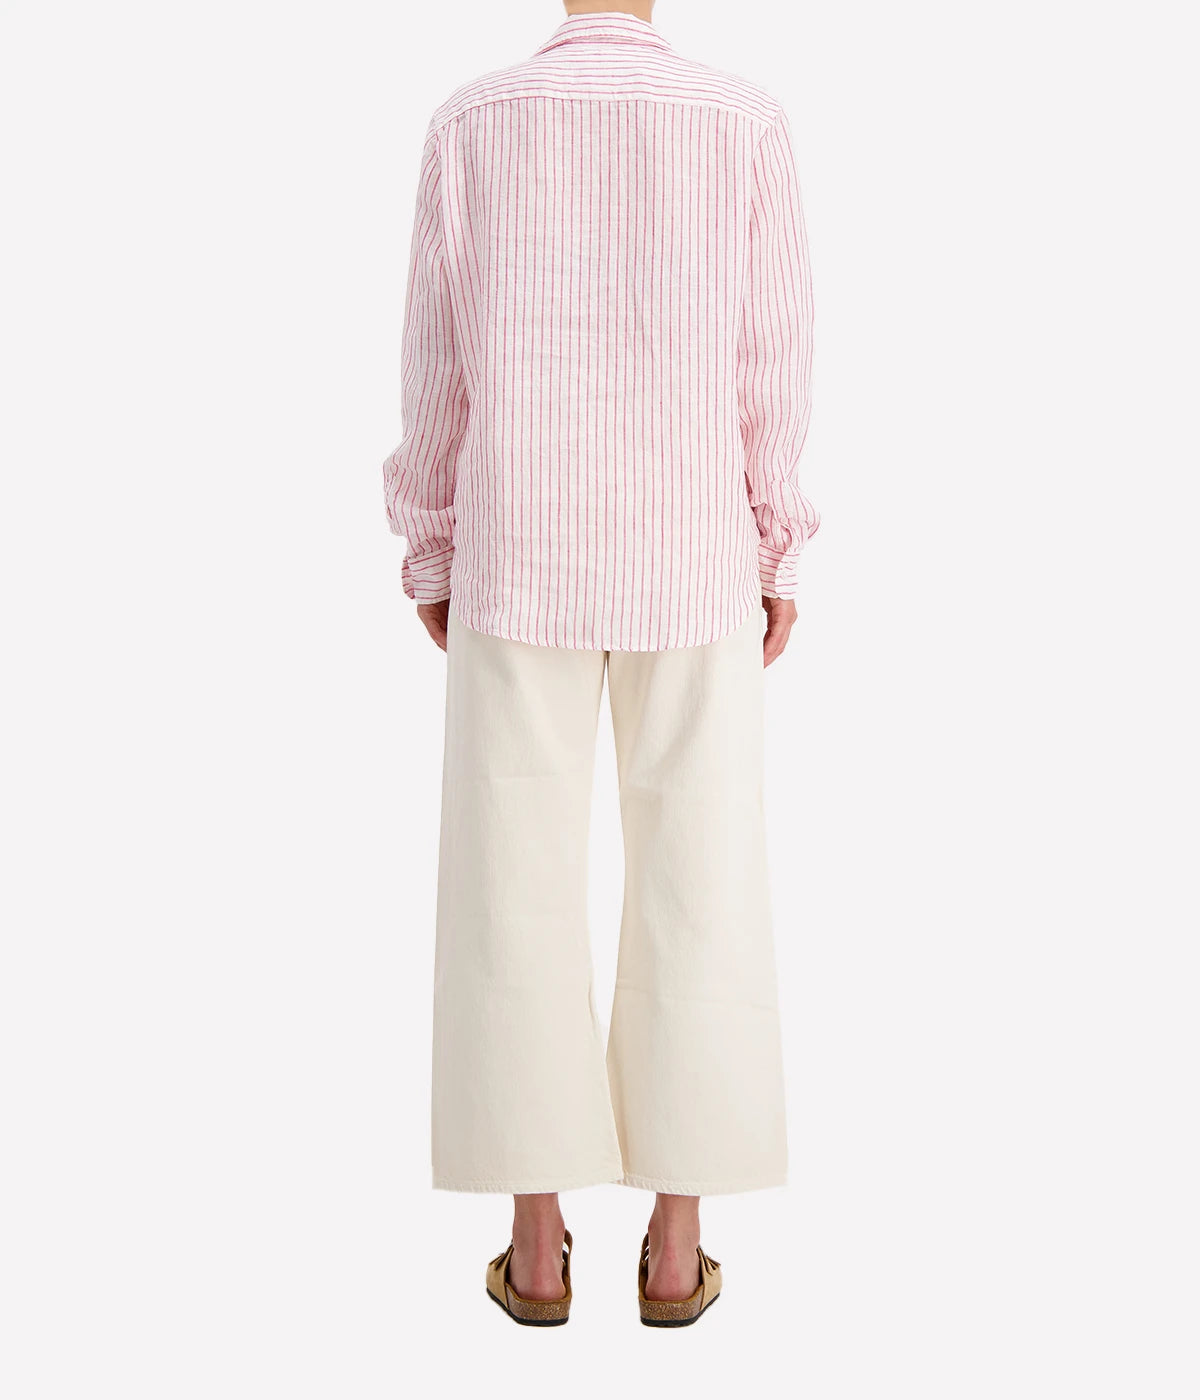 Eileen Relaxed Button Up Shirt in Pink Stripe Classic Linen